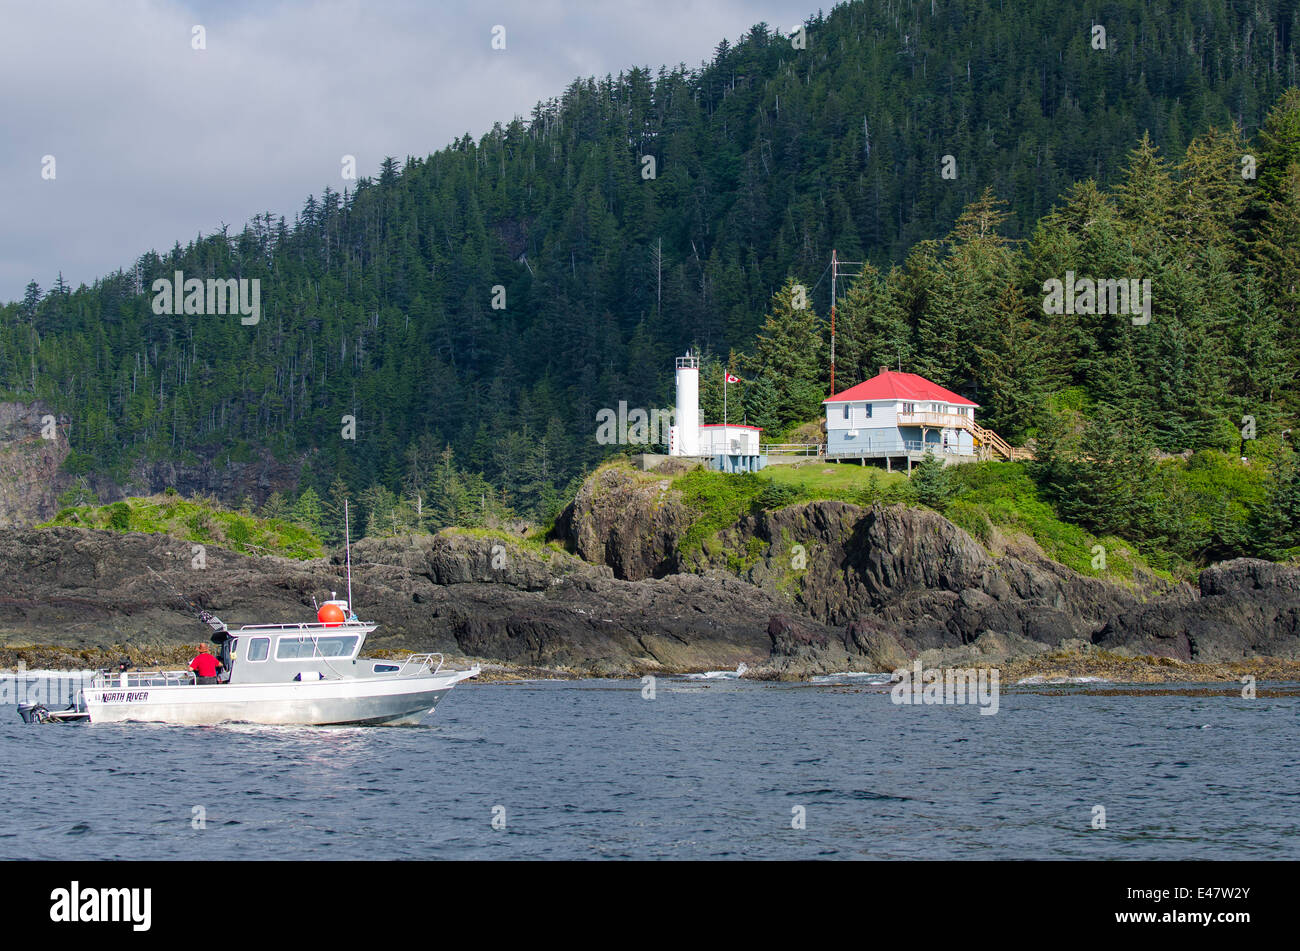 Fishing boat at Quatsino Sound Lighthouse Kains Island Light Station, Port Alice, Vancouver Island, British Columbia, Canada. Stock Photo